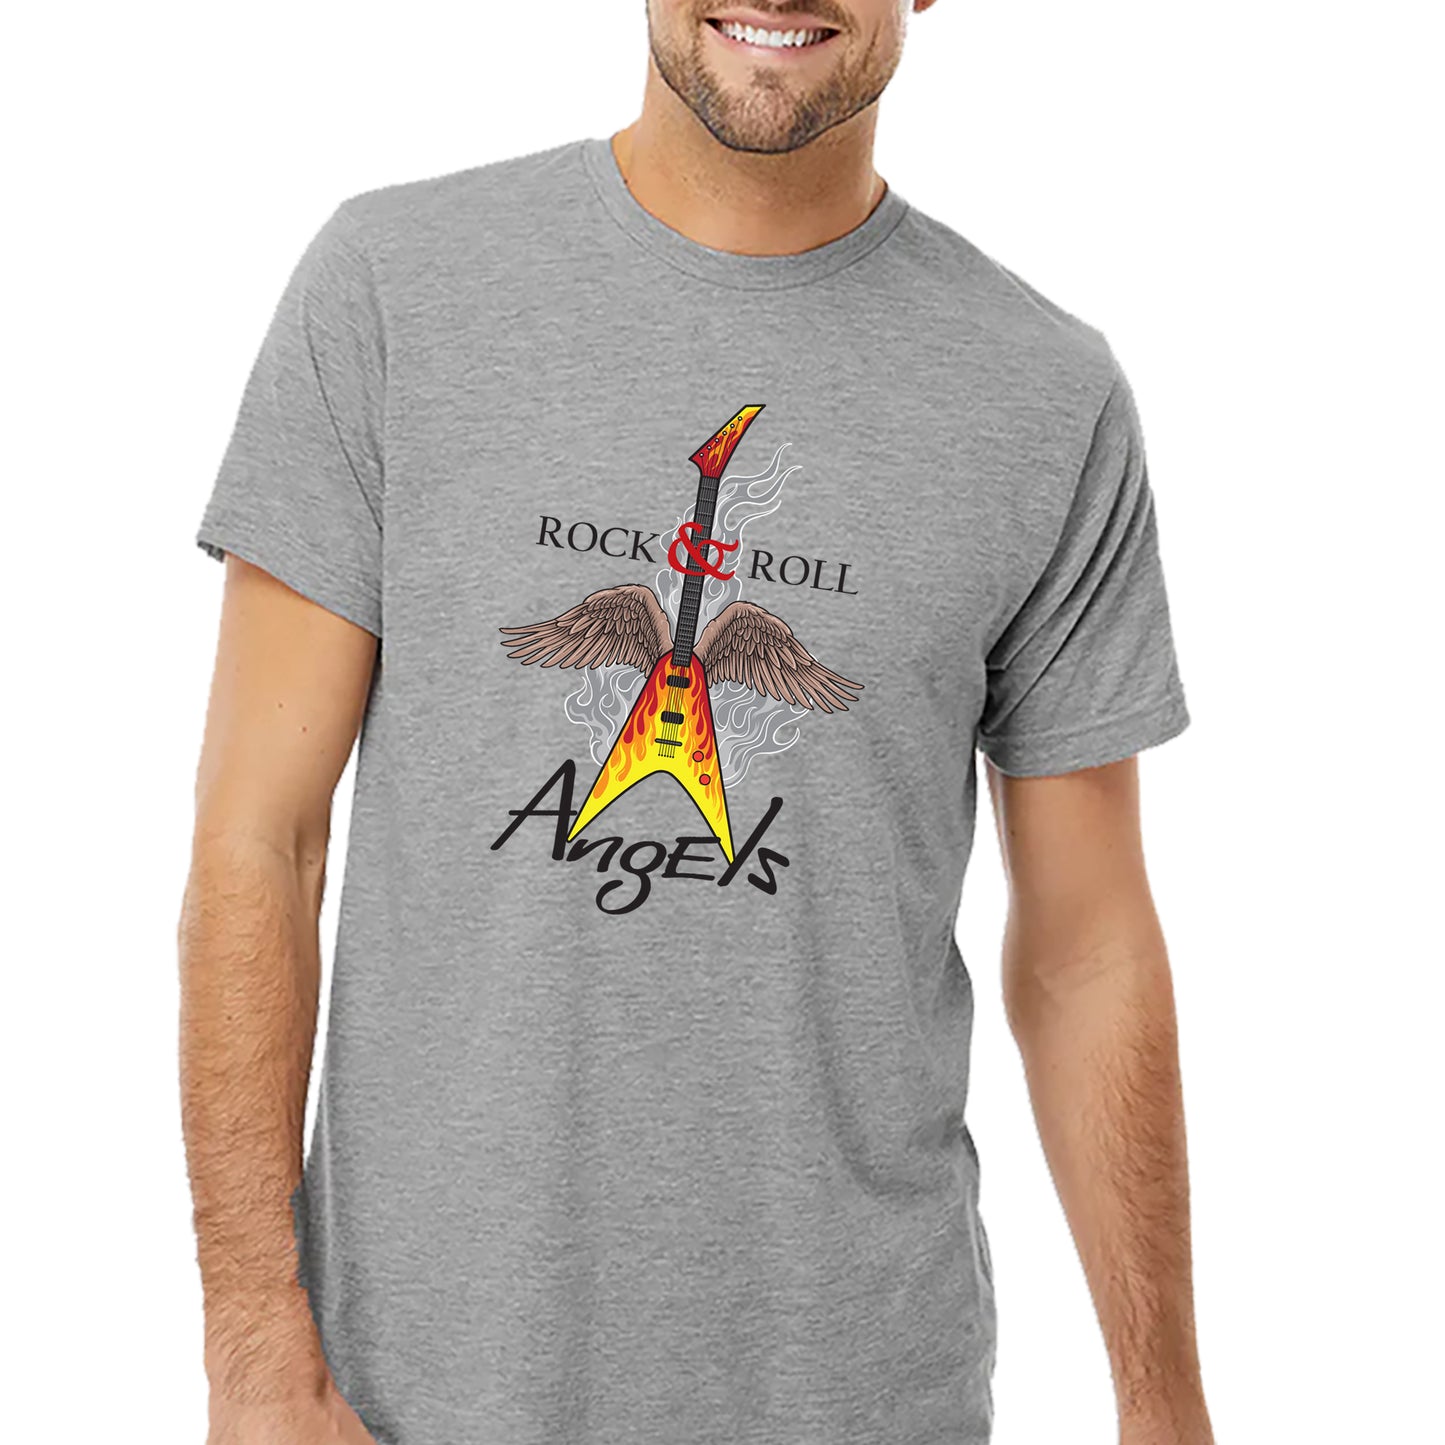 Rock & Roll Angels T-shirt